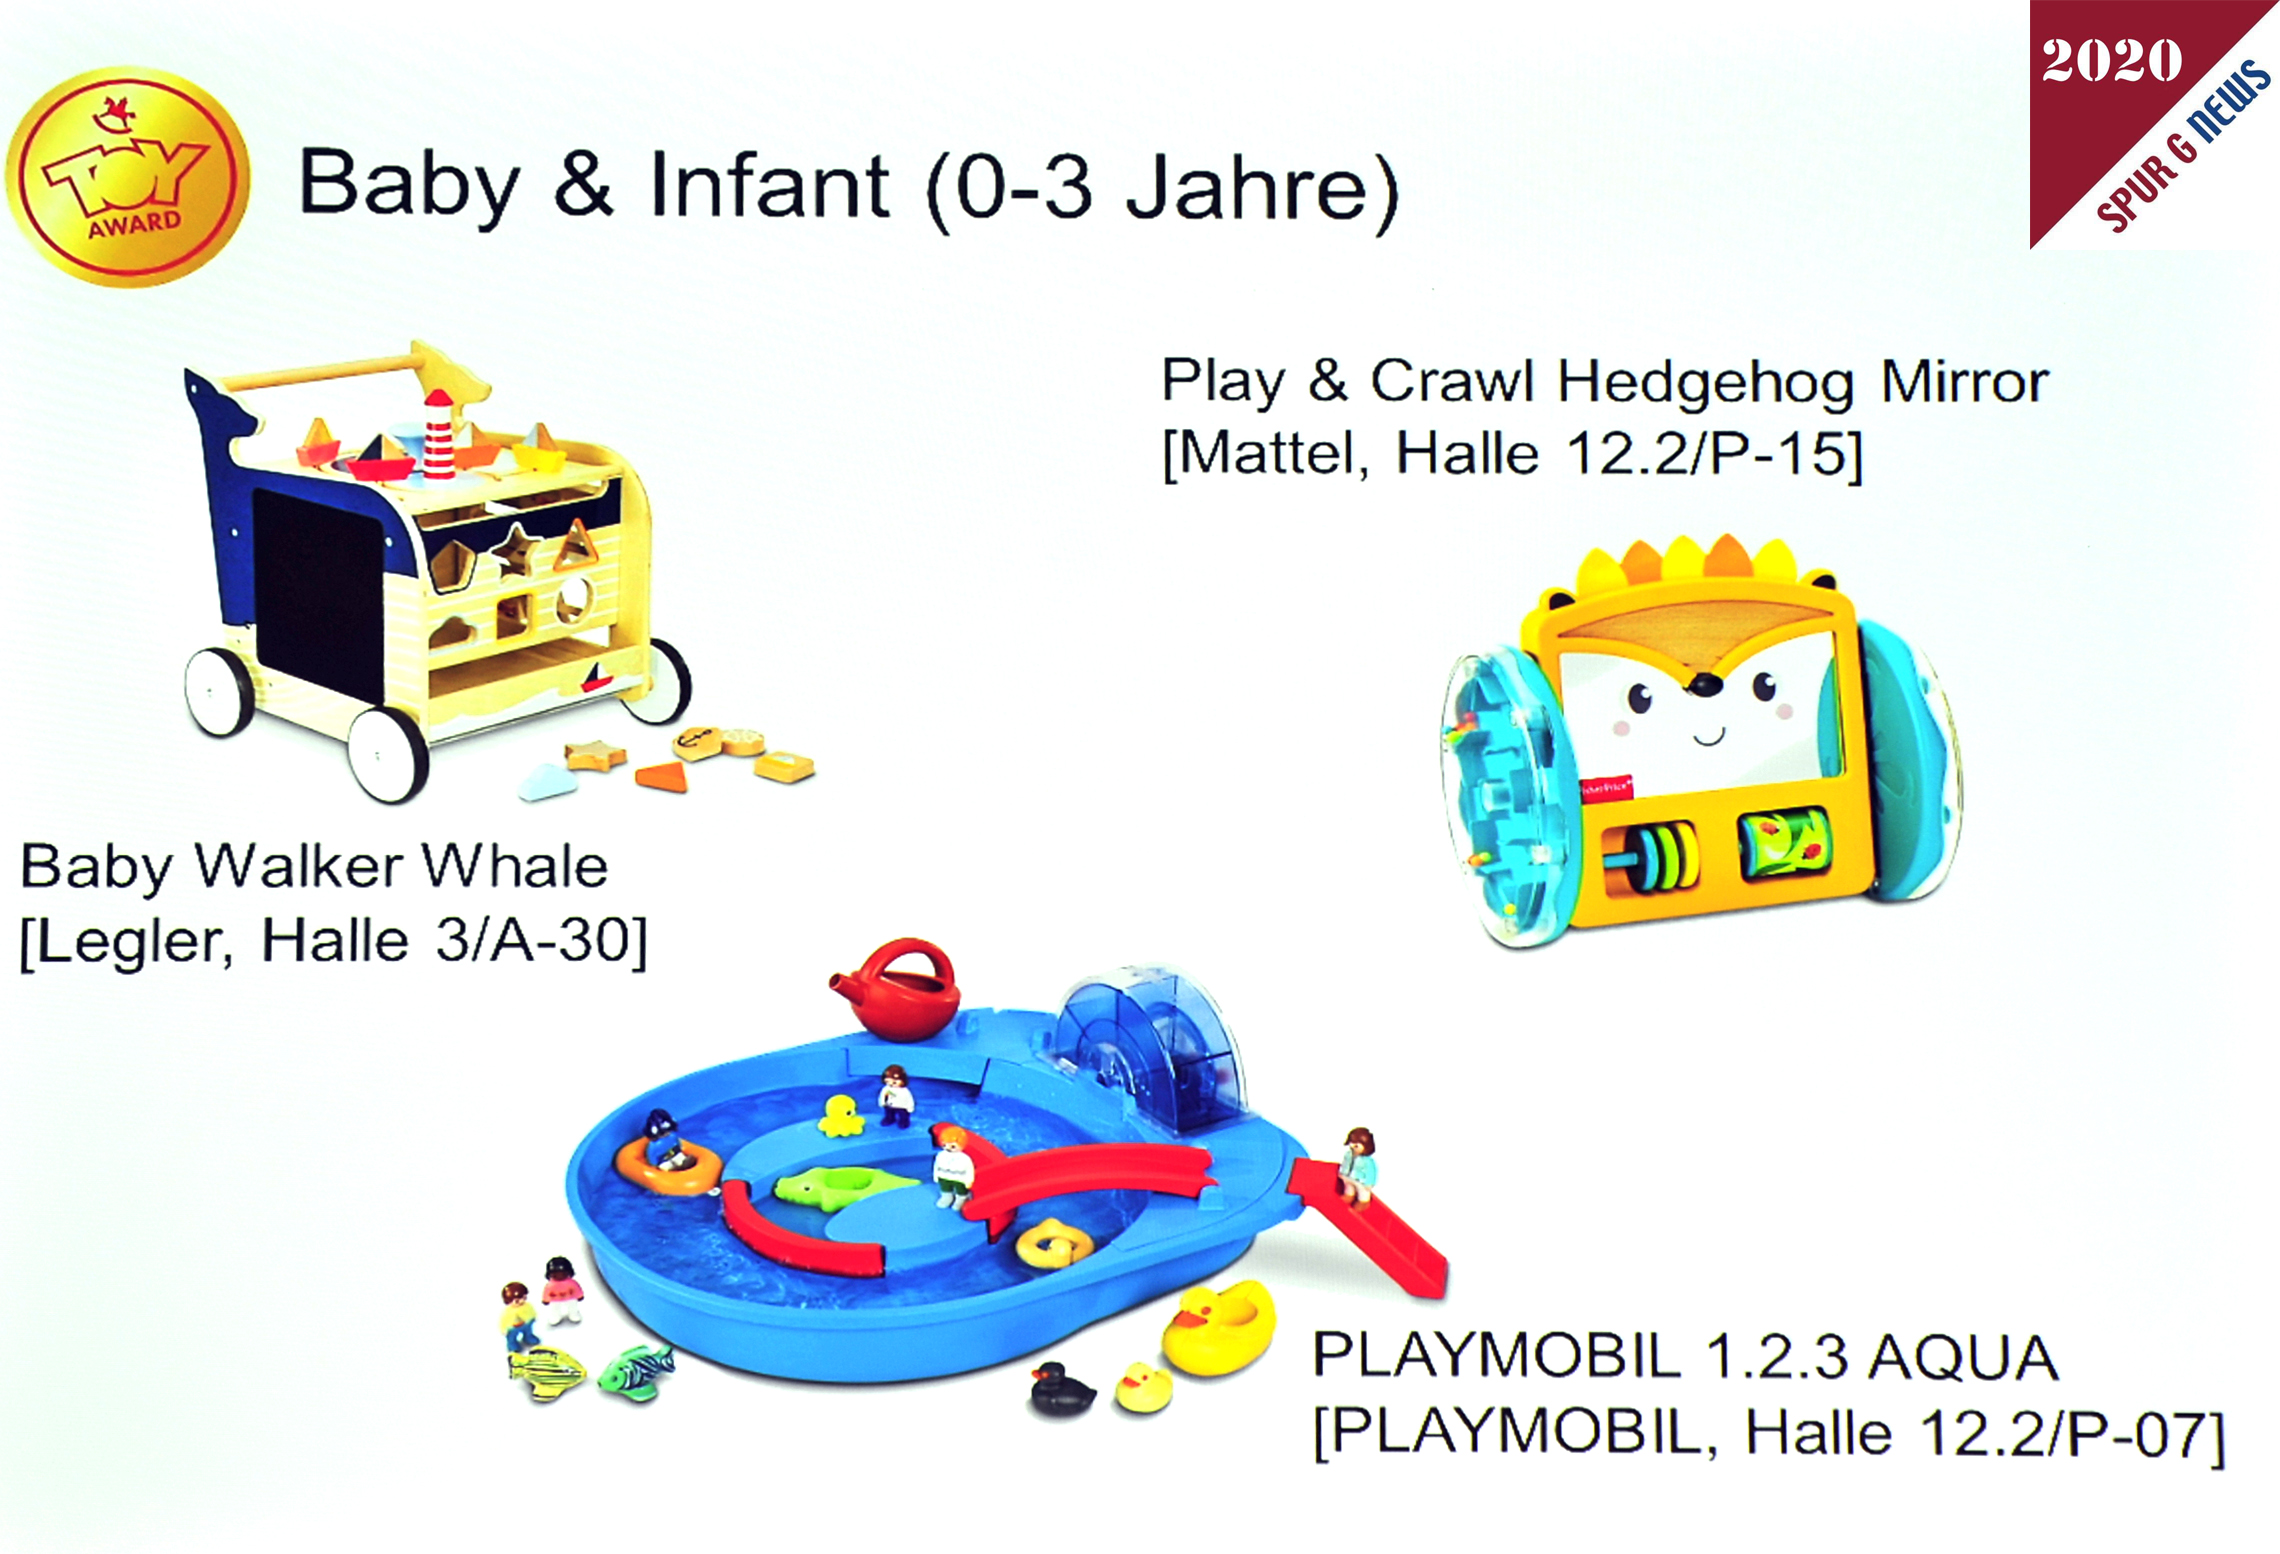 Toy Award 2020, Baby & Infant 0-3 Jahre, Baby Walker Whale, Play&Crawl Hedgehog Mirror, Playmobil 1.2.3. Aqua